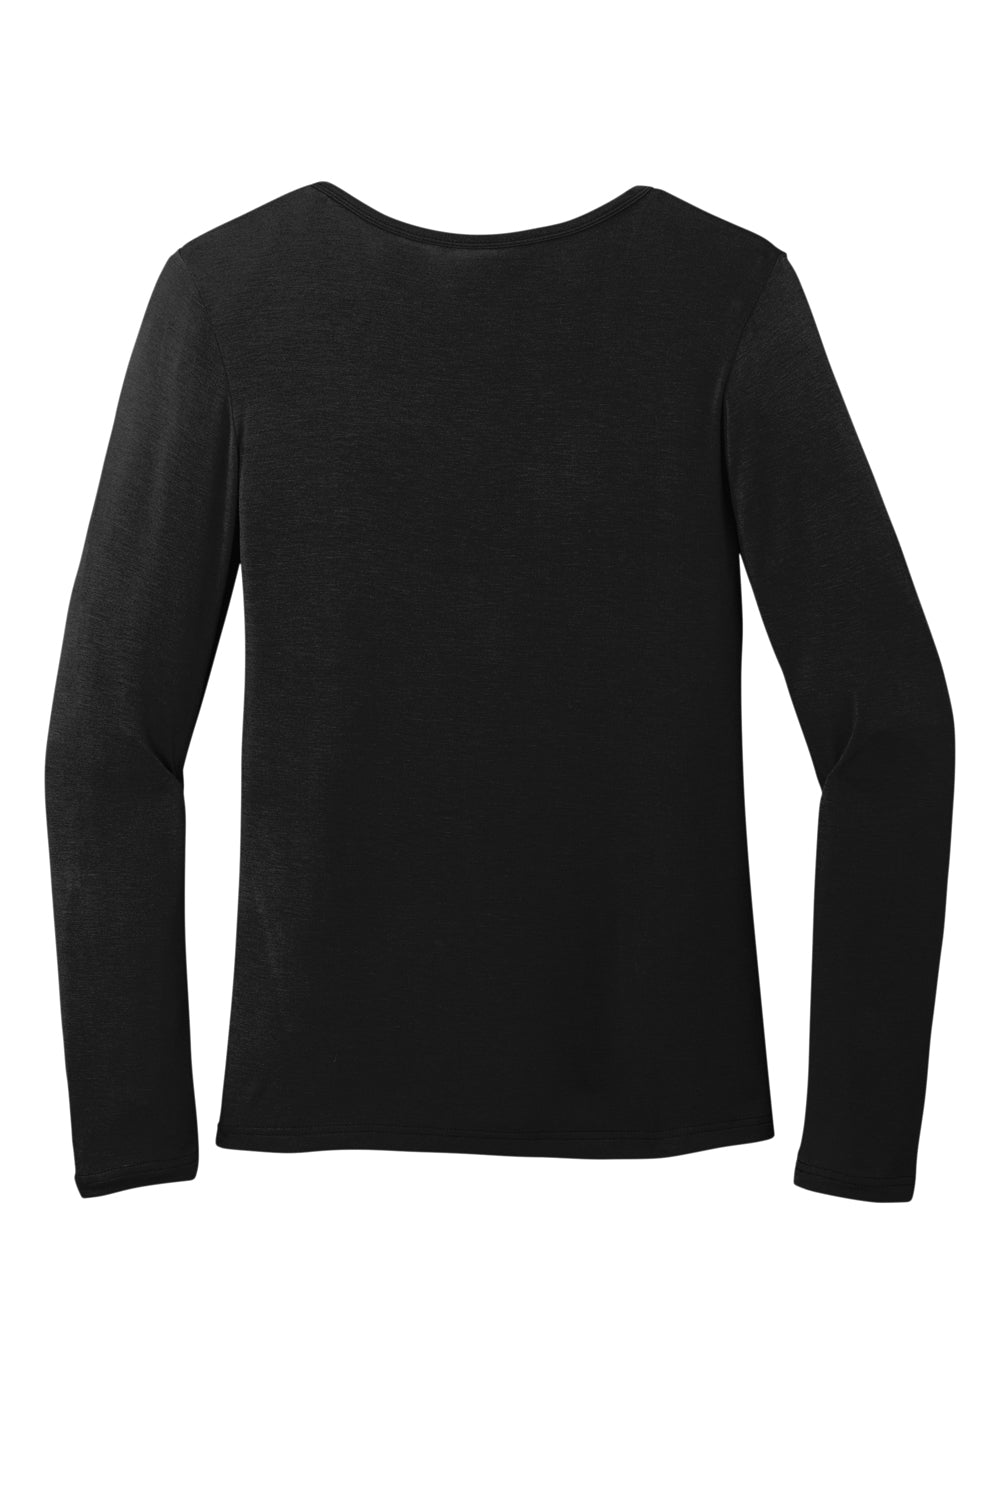 Wonderwink WW4029 Long Sleeve Crewneck Layer T-Shirt Black Flat Back